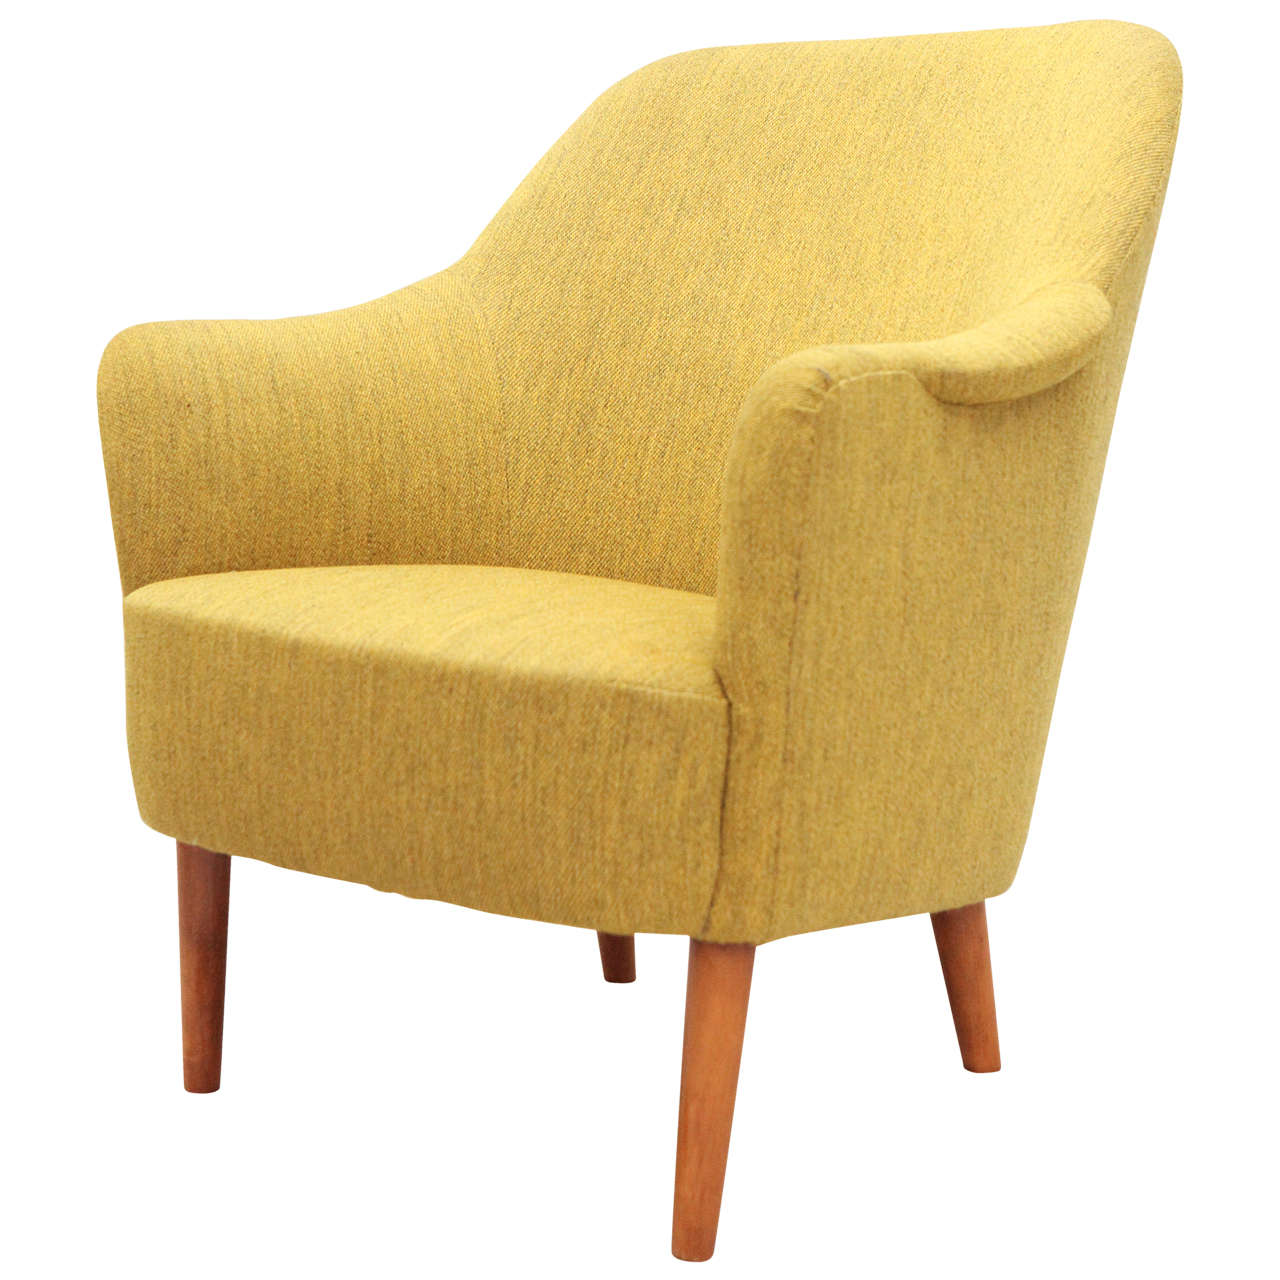 Carl Malmsten "Samspel" Lounge Chair